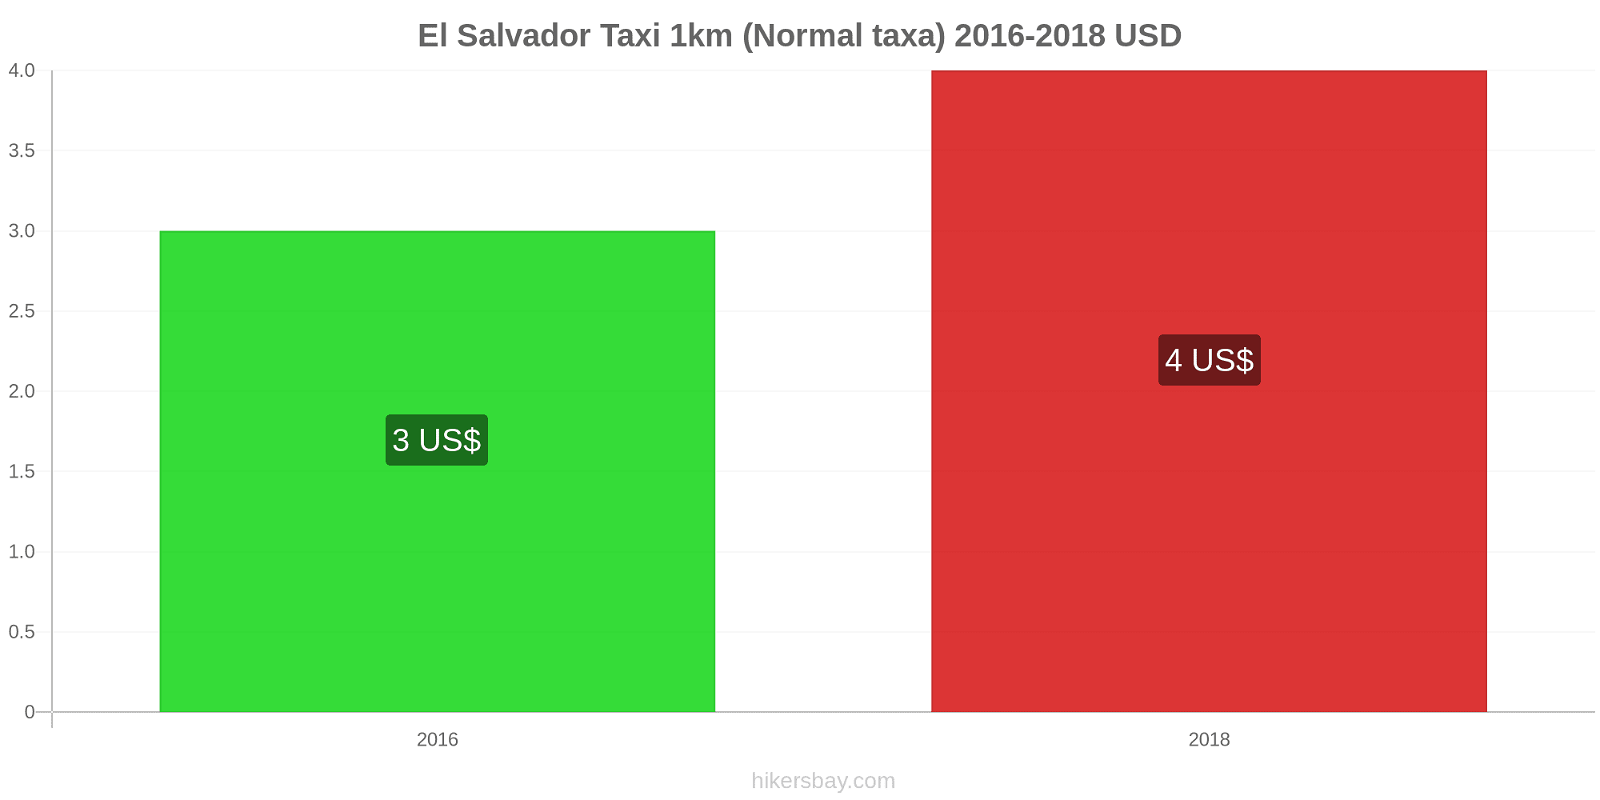 El Salvador prisändringar Taxi 1km (Normal taxa) hikersbay.com